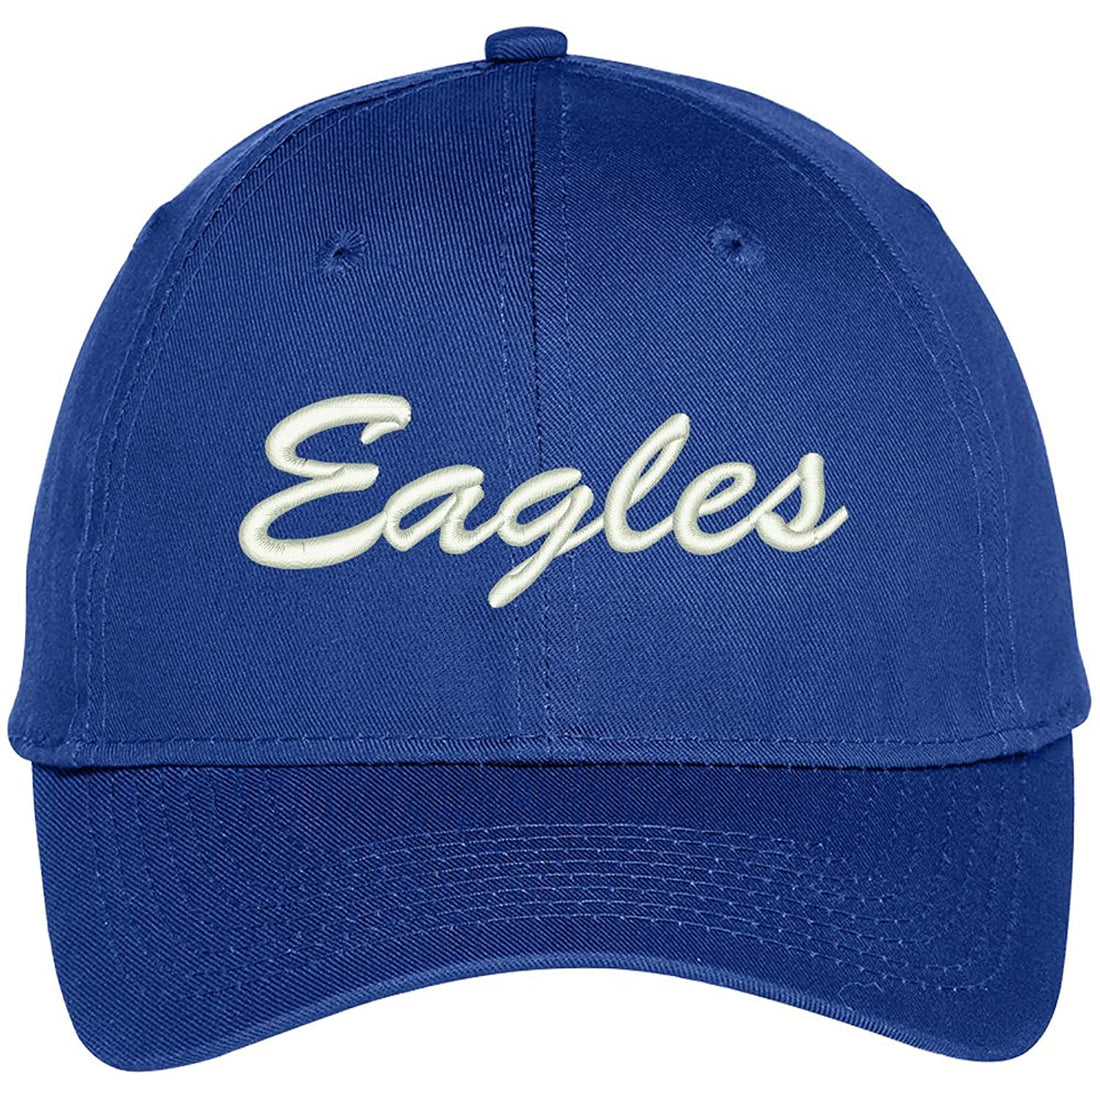 Trendy Apparel Shop Eagles Embroidered Precurved Adjustable Cap - Navy